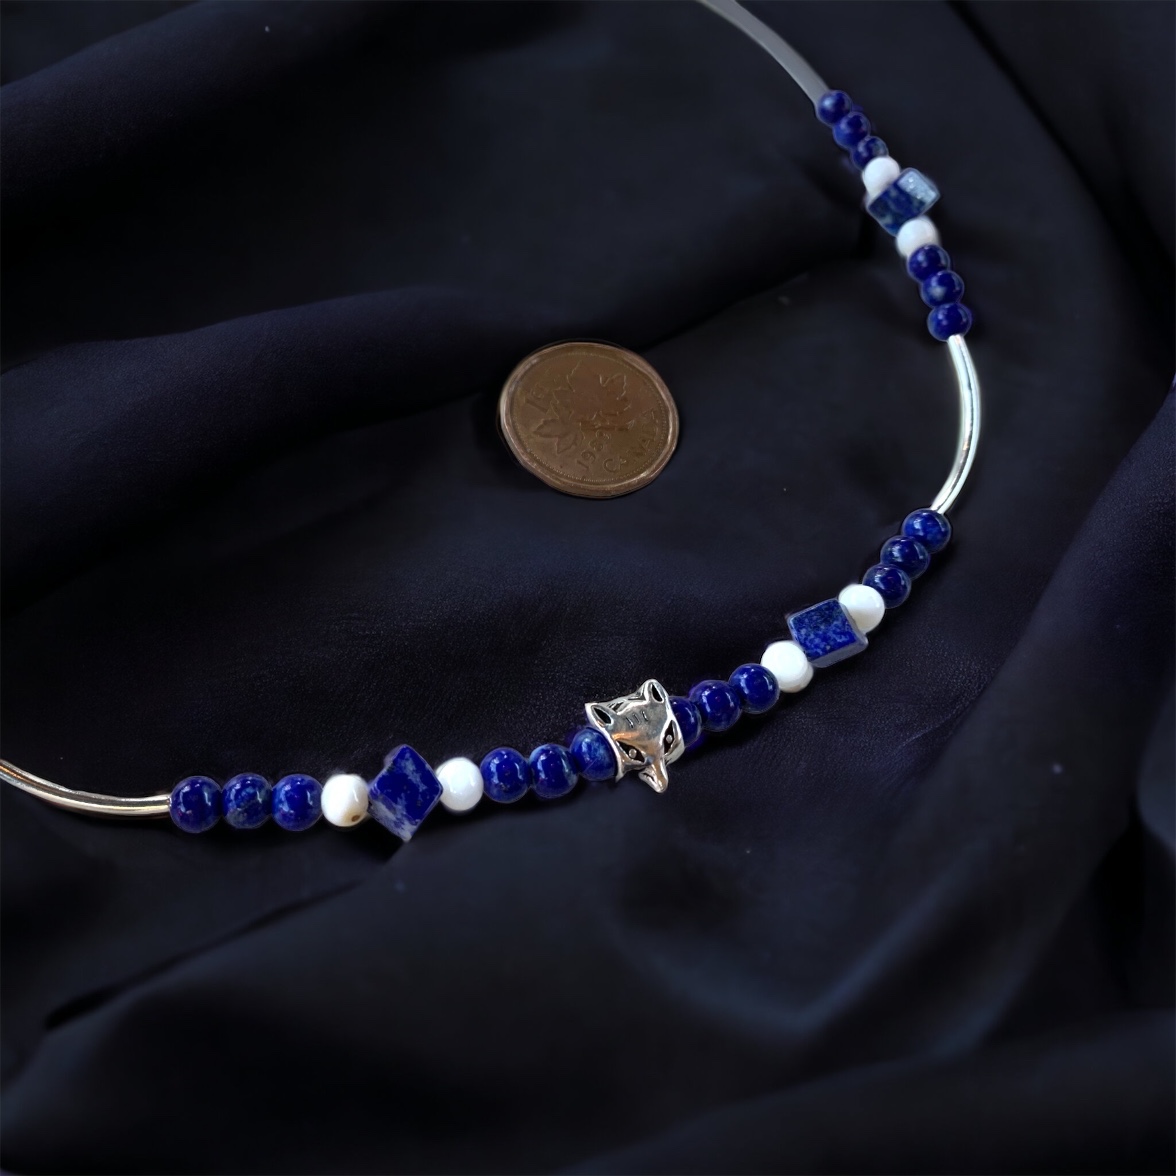 Silver Fox handmade necklace